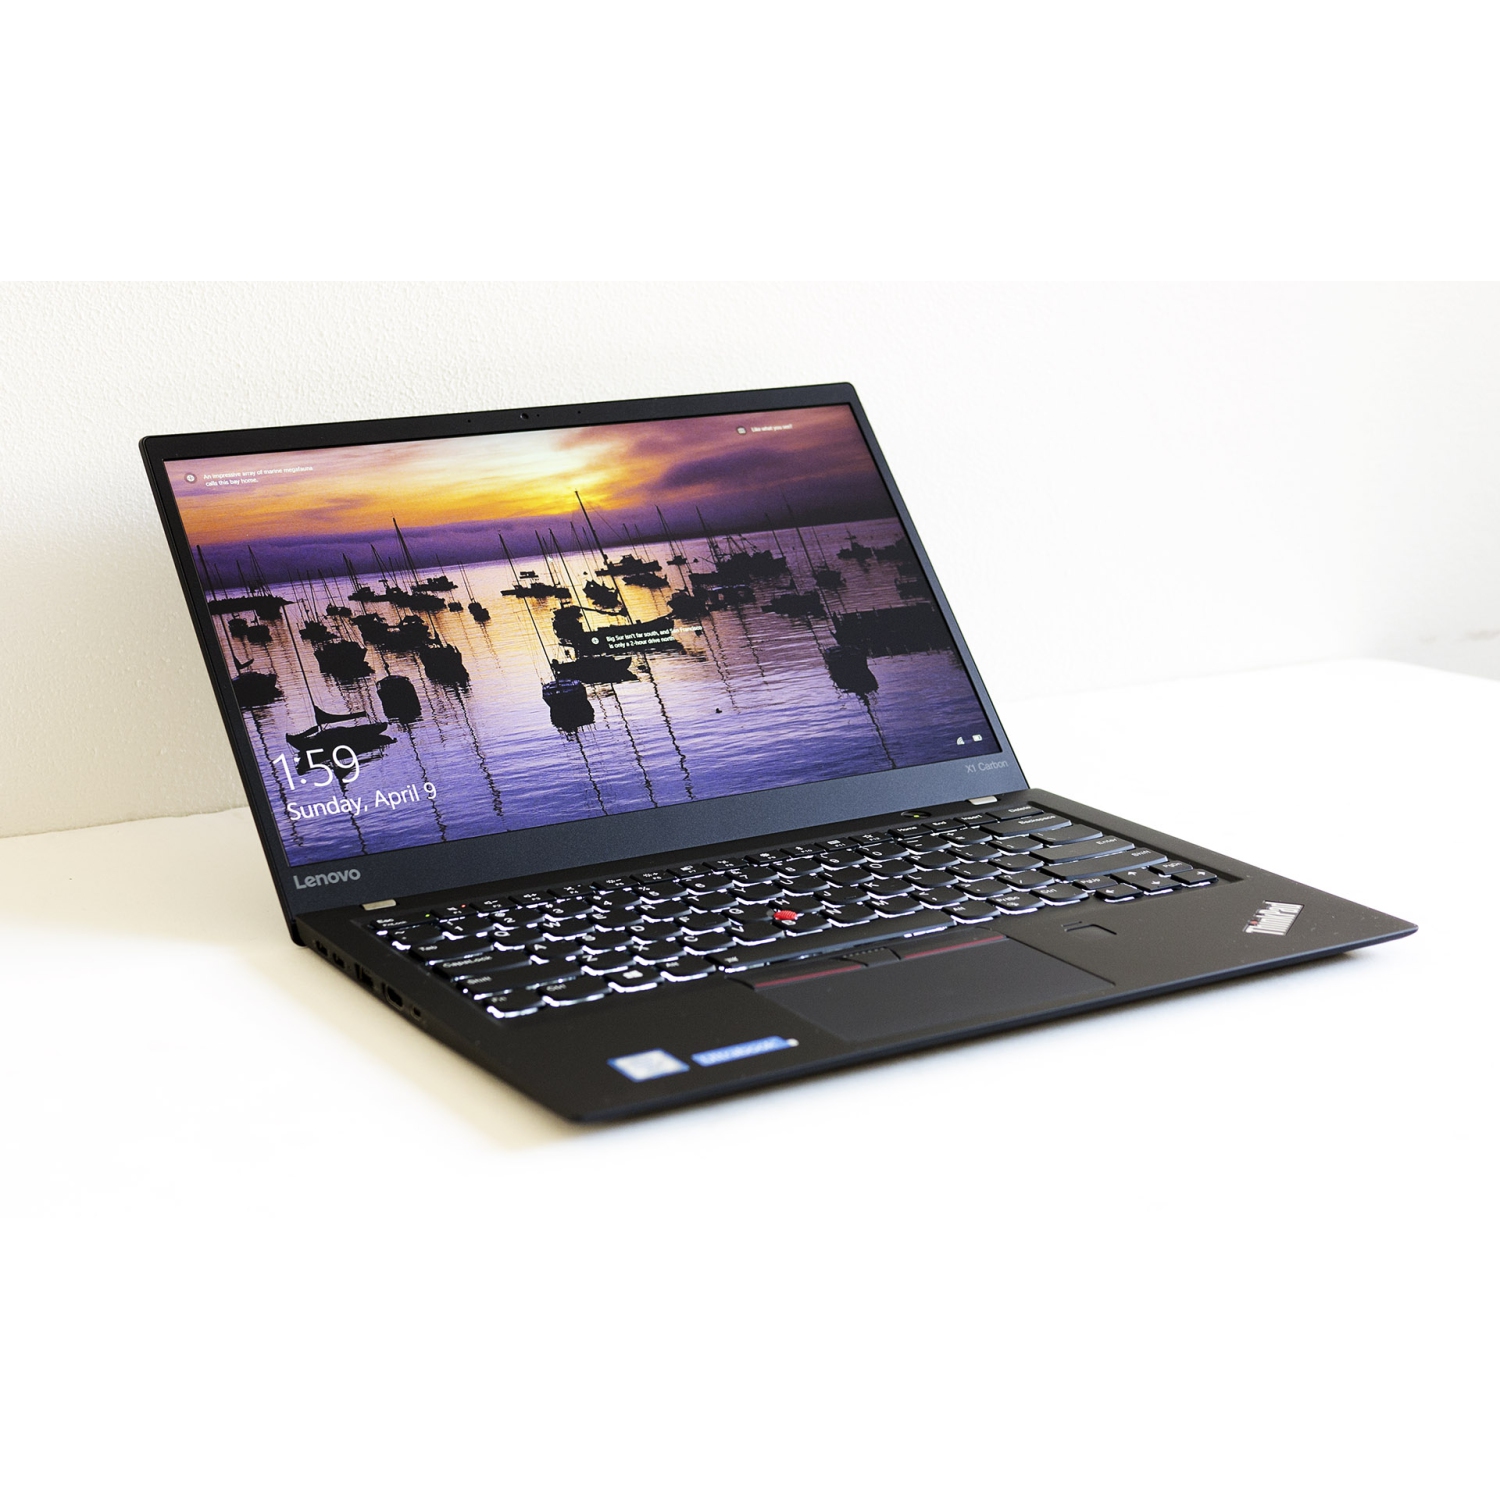 Refurbished (Good) - Lenovo X1 Carbon 14" Laptop, i7-8650U @ 1.9GHz, 16GB RAM, 512GB SSD, Win 10 Pro